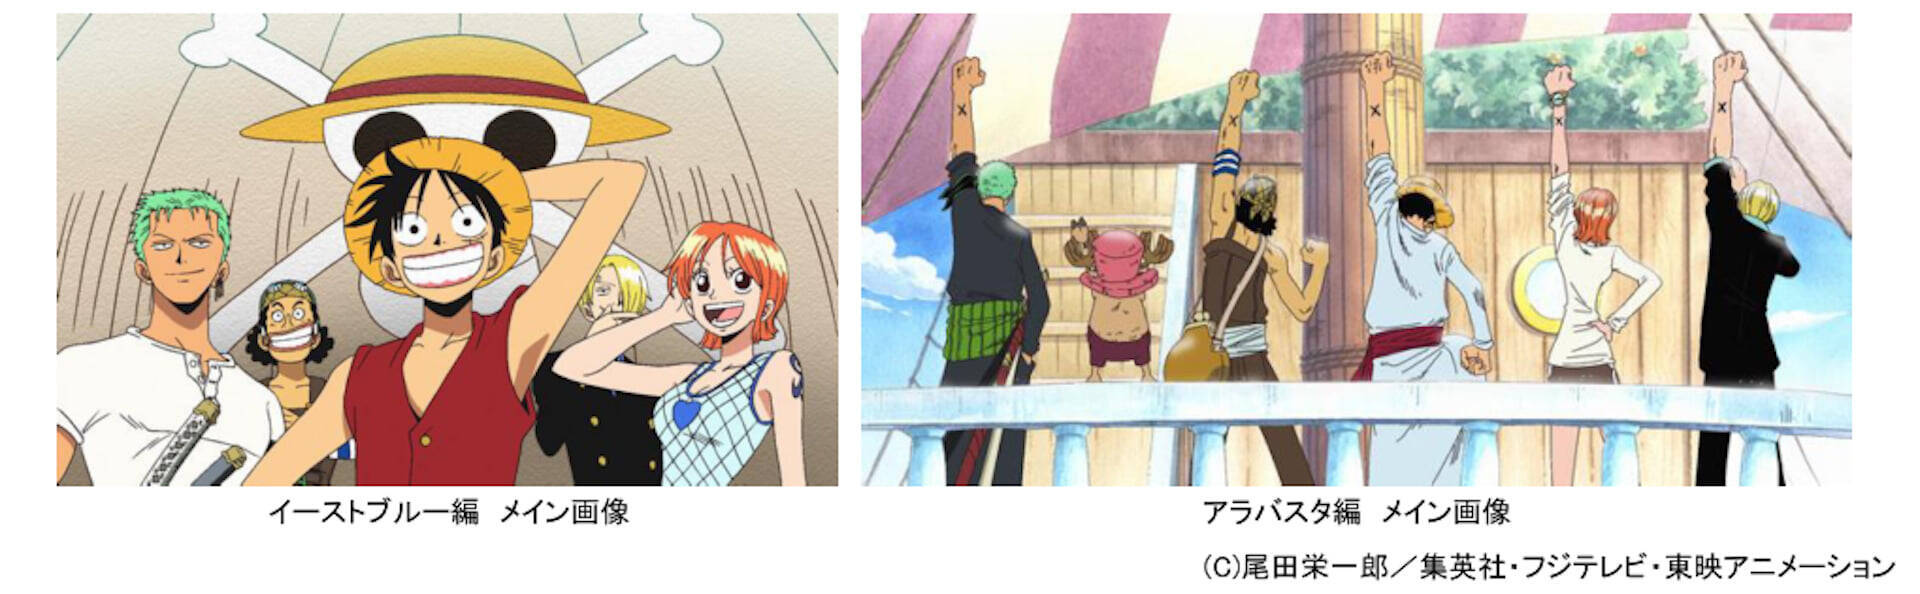 One Piece Stampede 公開を前に あの名場面をもう一度 ワンピース Fodにて1 130話が無料配信 放送開始周年記念 19年7月8日 エキサイトニュース